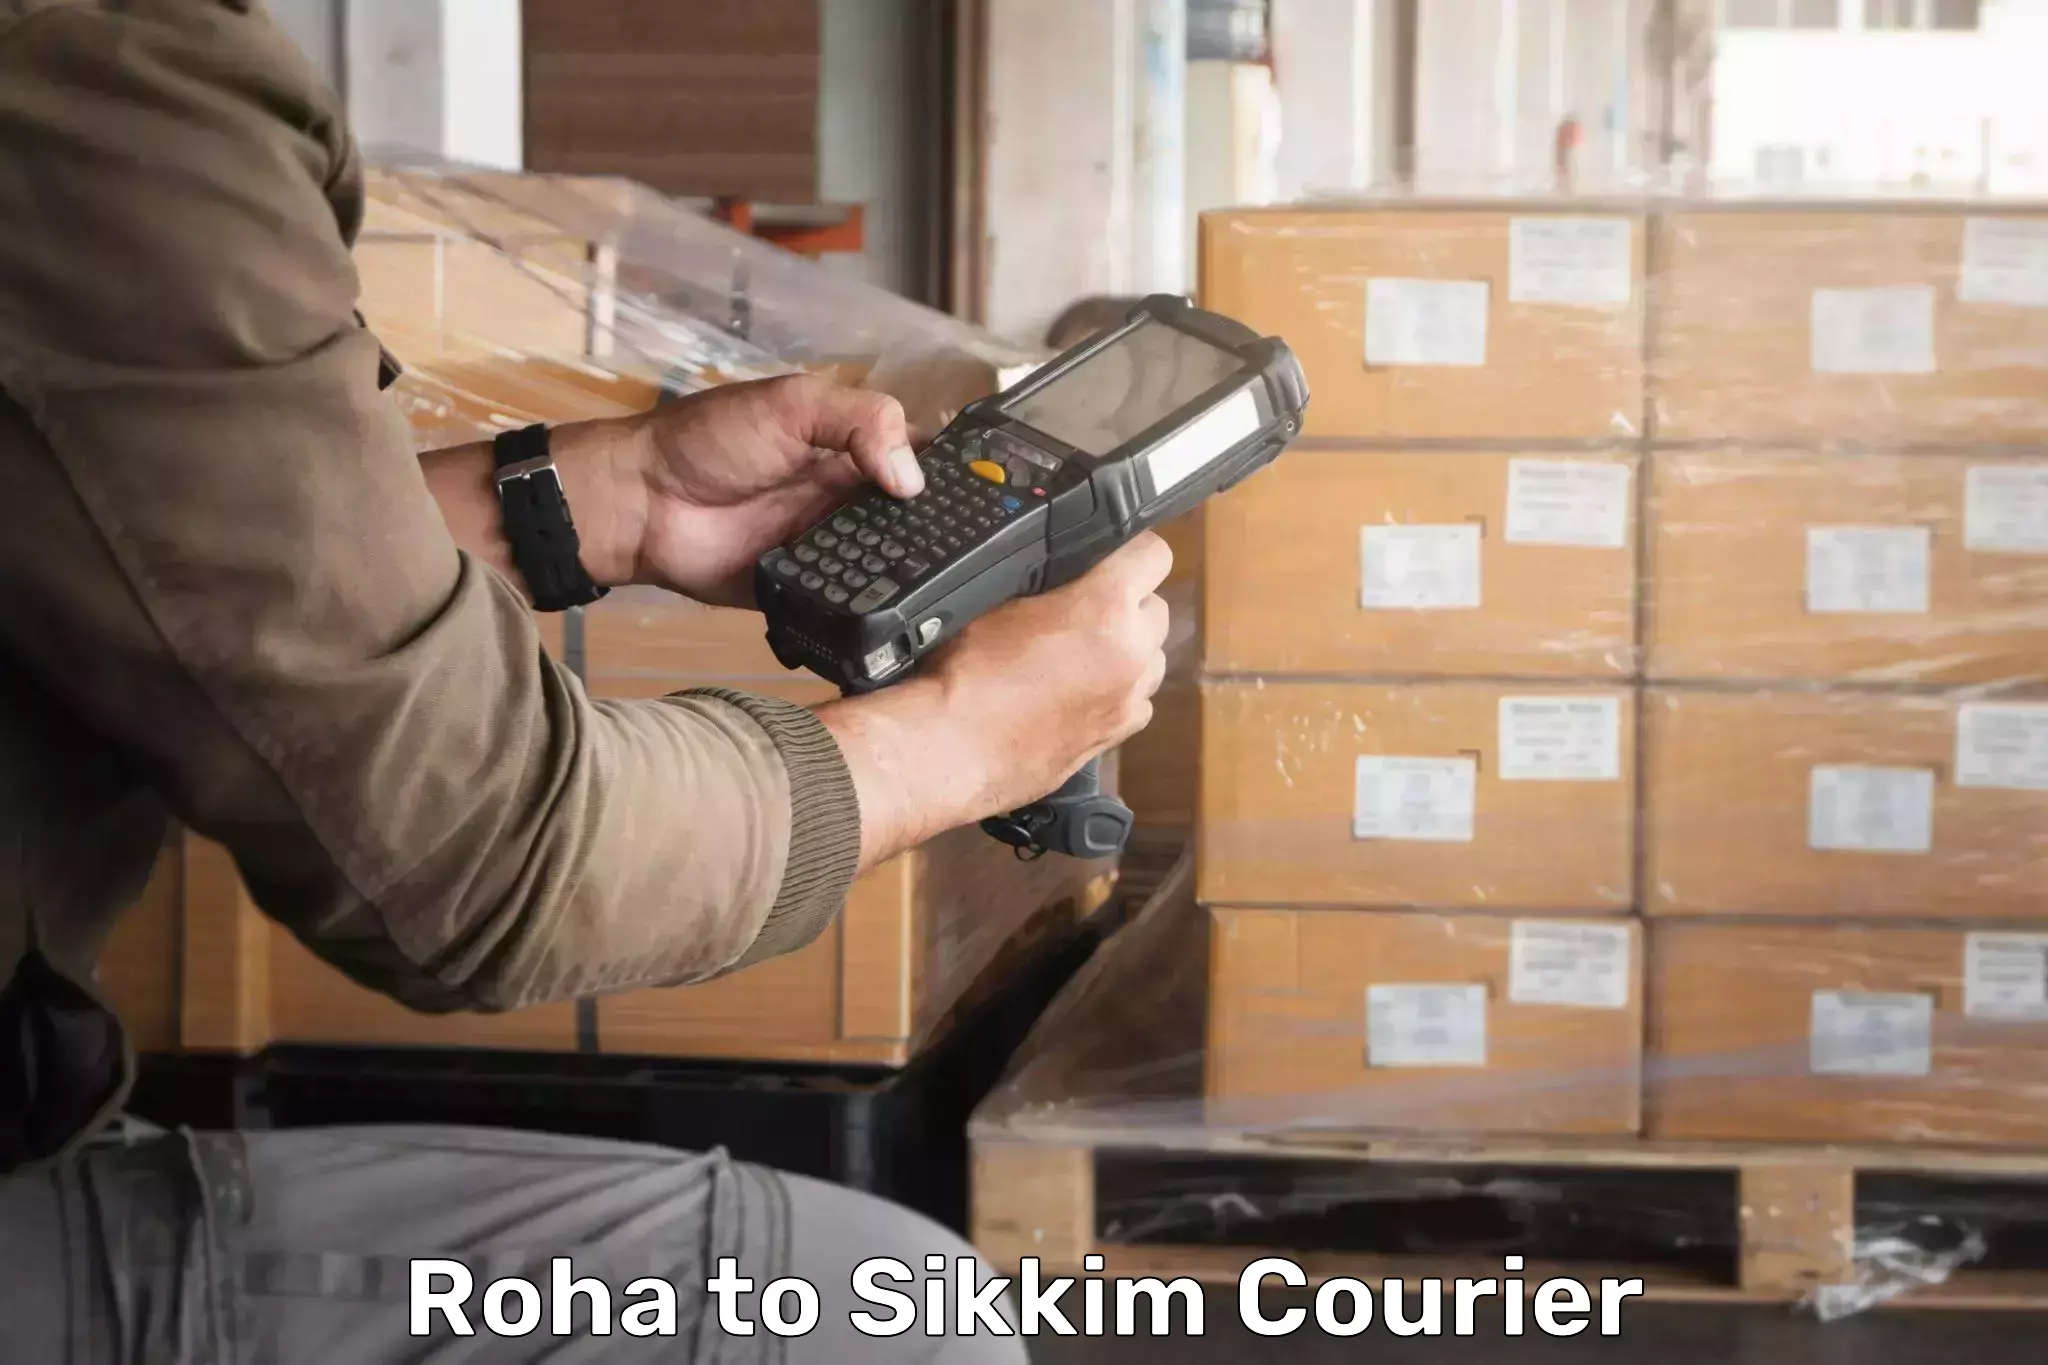 Nationwide shipping capabilities Roha to Pelling